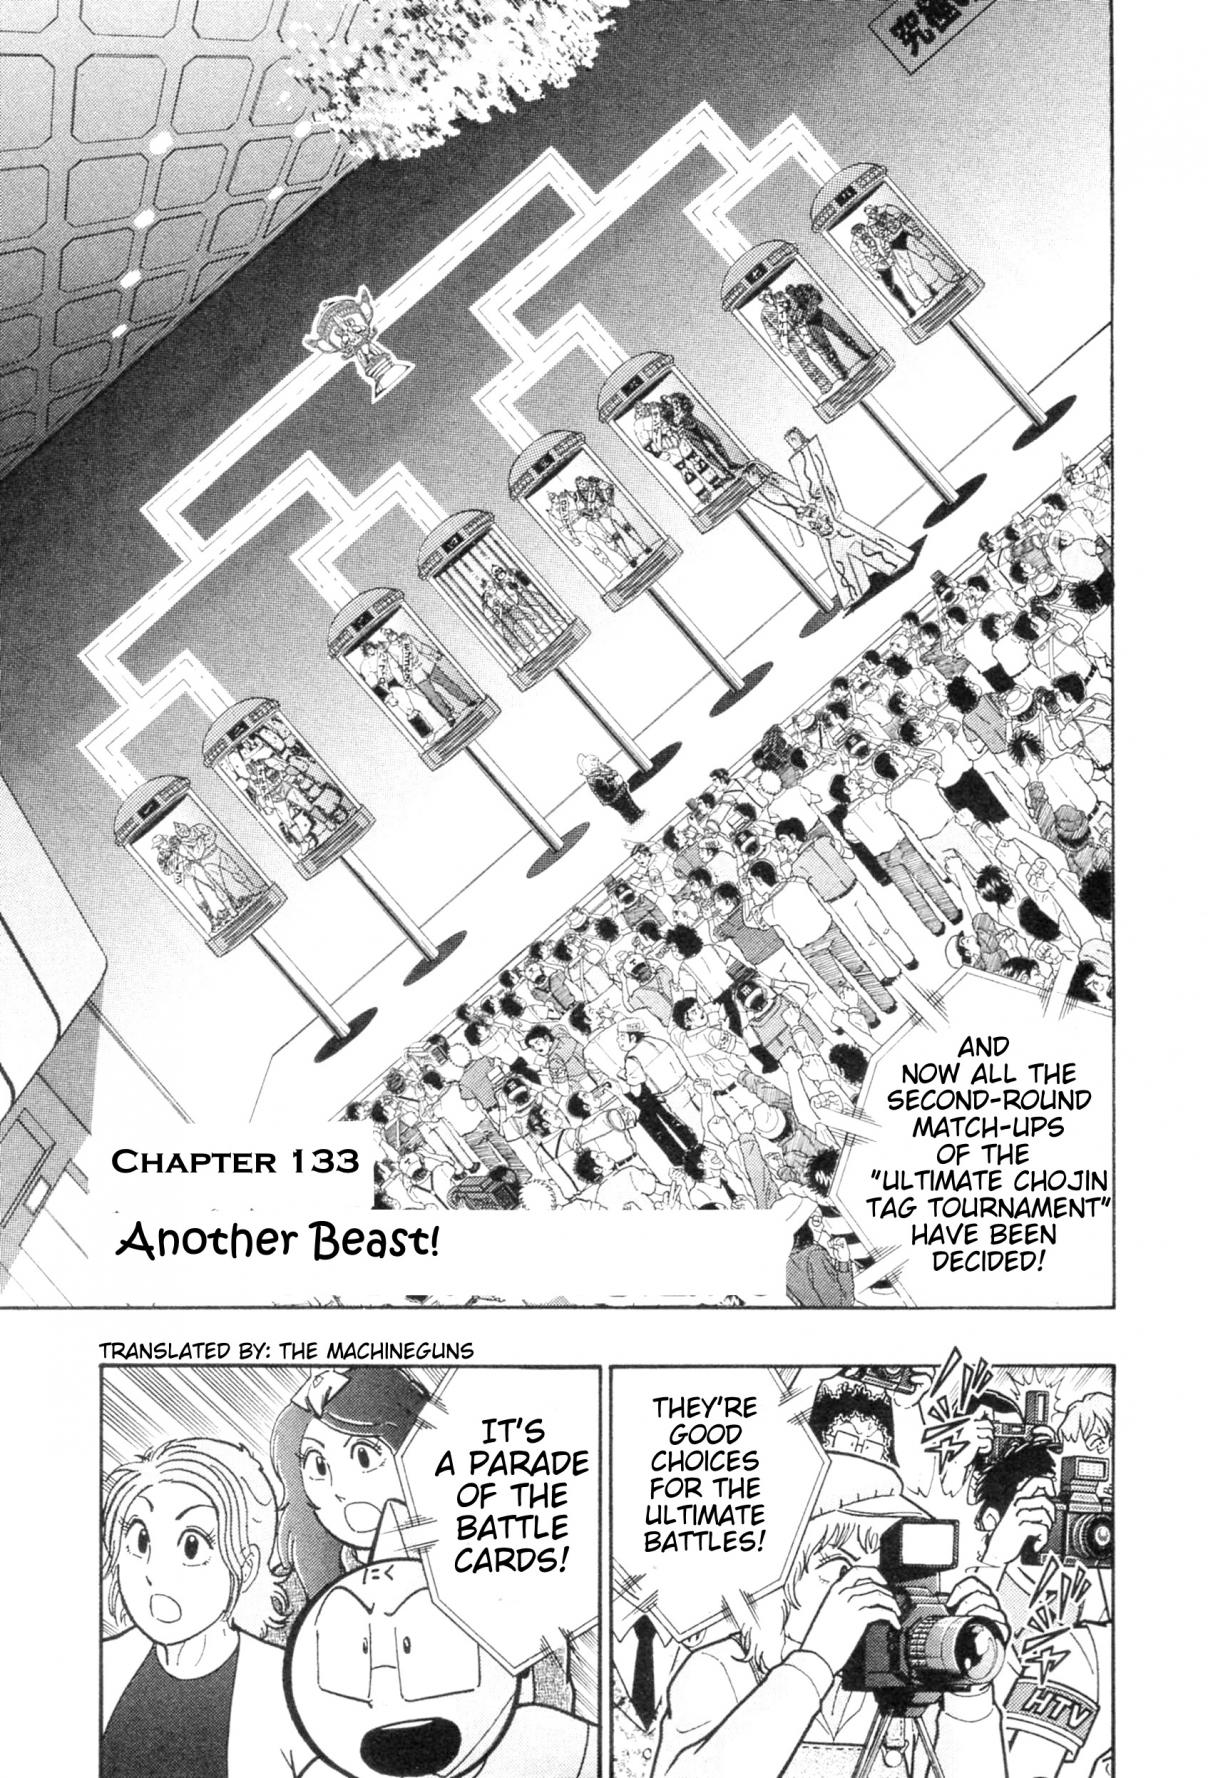 Kinnikuman Nisei: Ultimate Choujin Tag Vol. 11 Ch. 113 Another Beast!